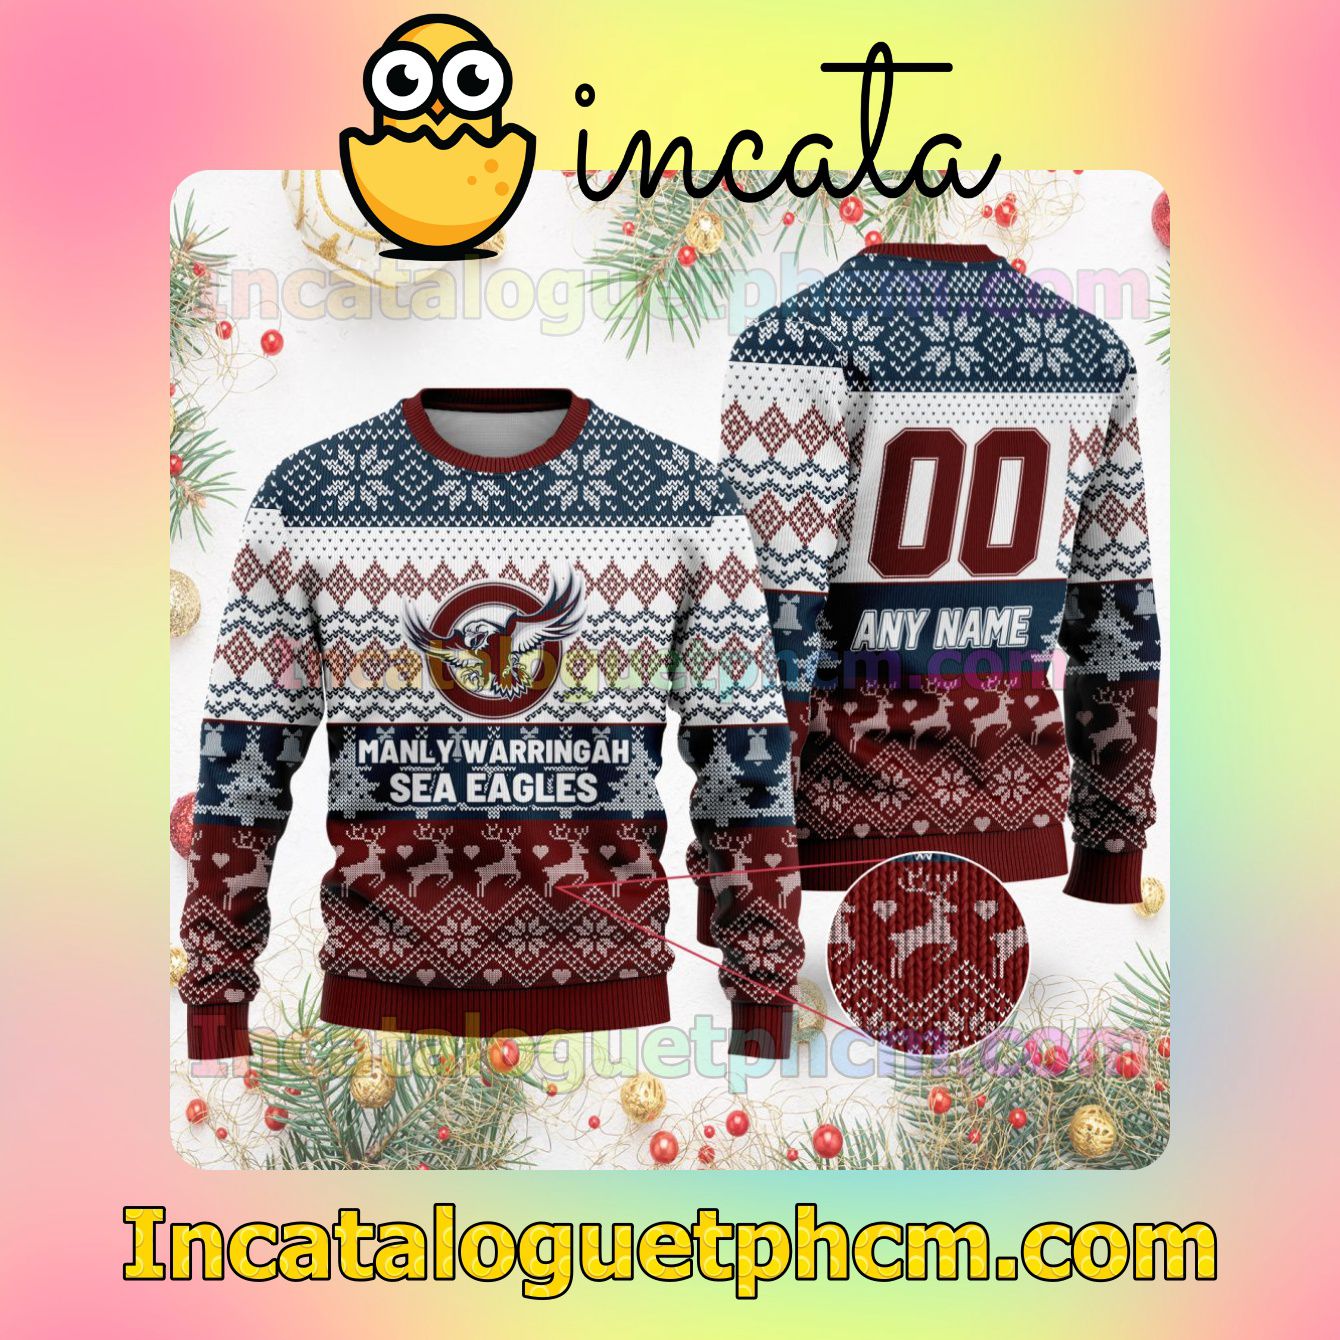 Wonderful NRL Manly Warringah Sea Eagles Ugly Christmas Jumper Sweater